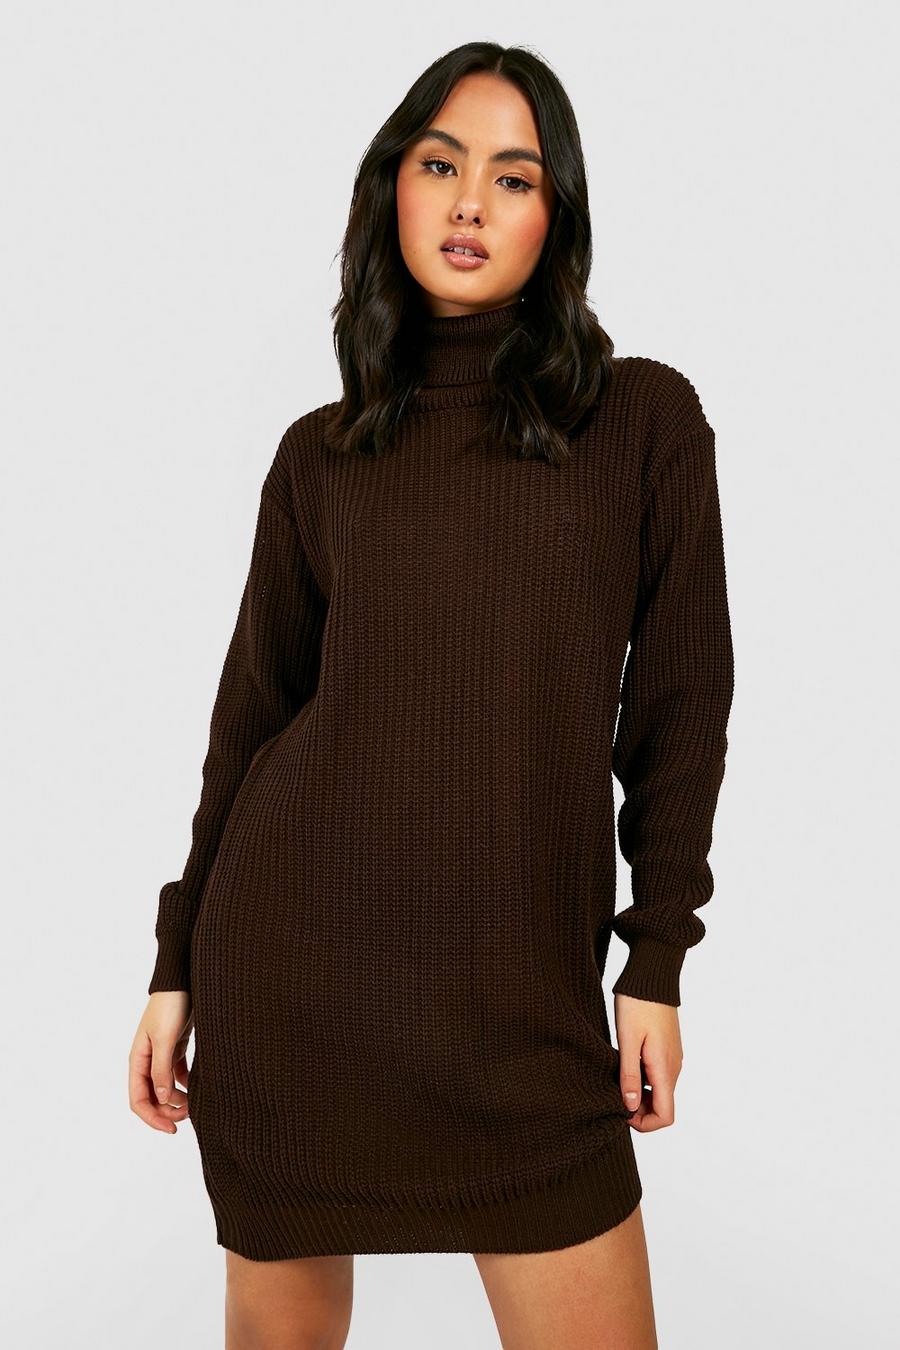 Chocolate brown Turtleneck Sweater Dress